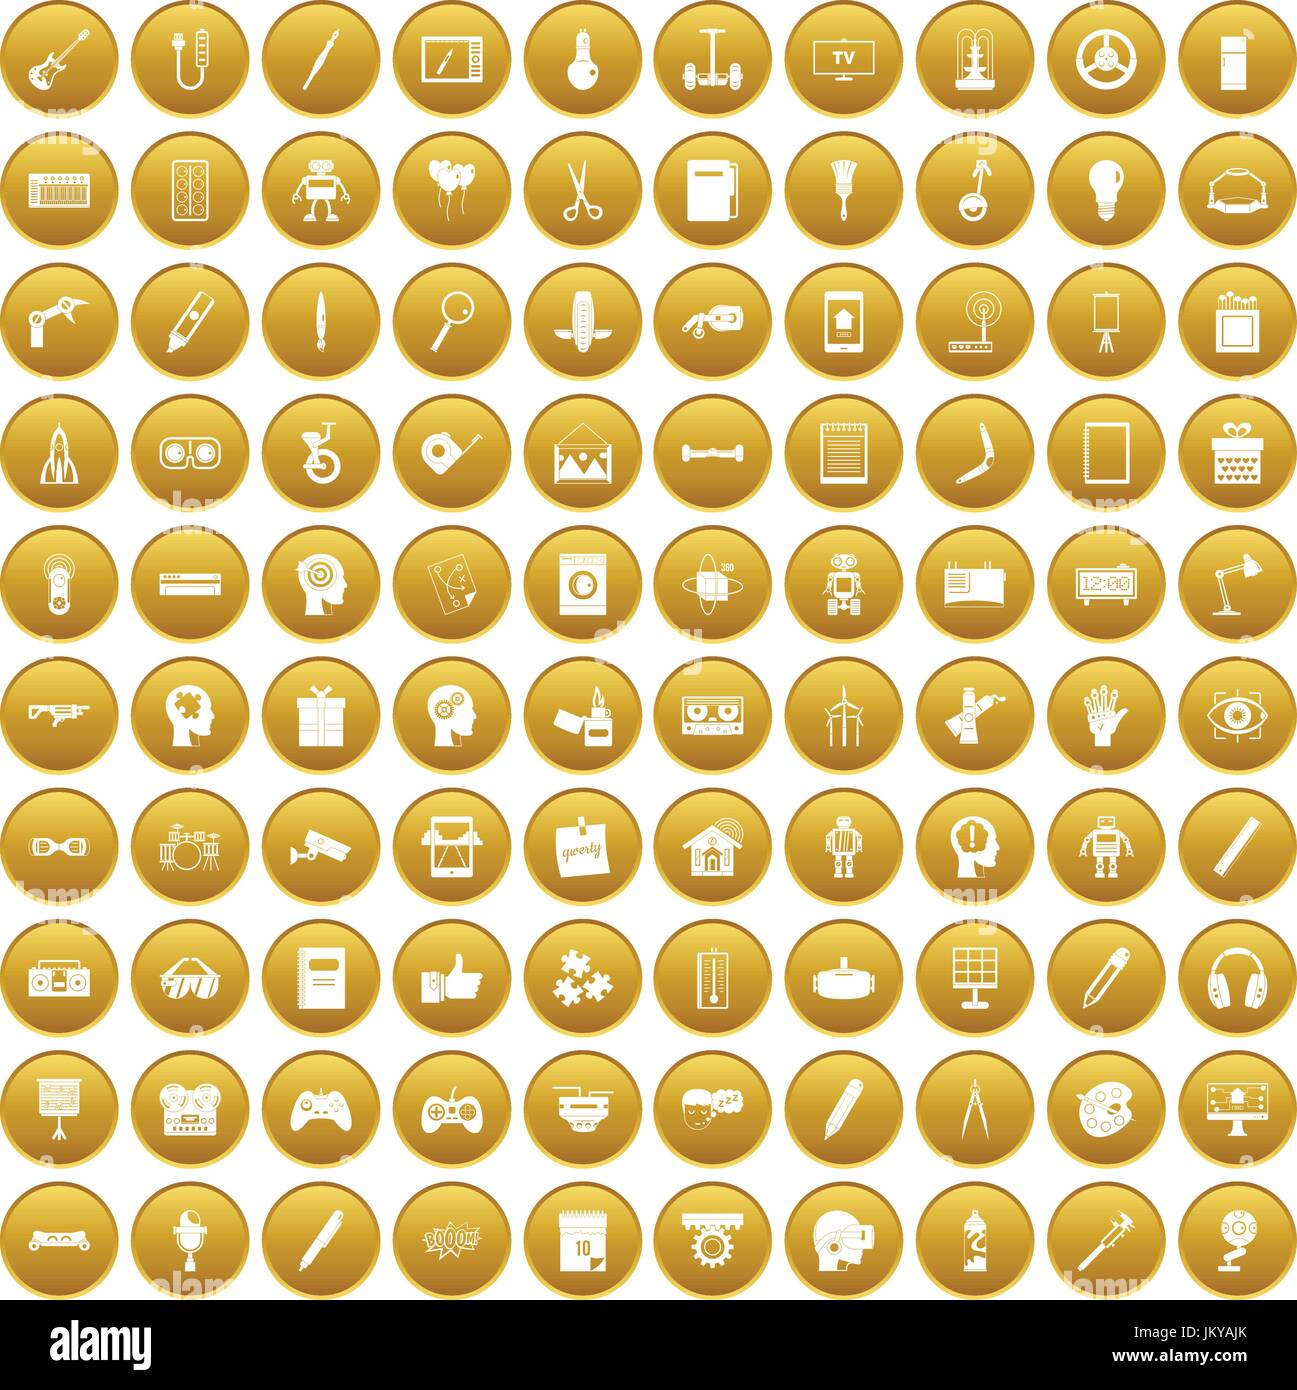 100 kreative Idee Icons set gold Stock Vektor